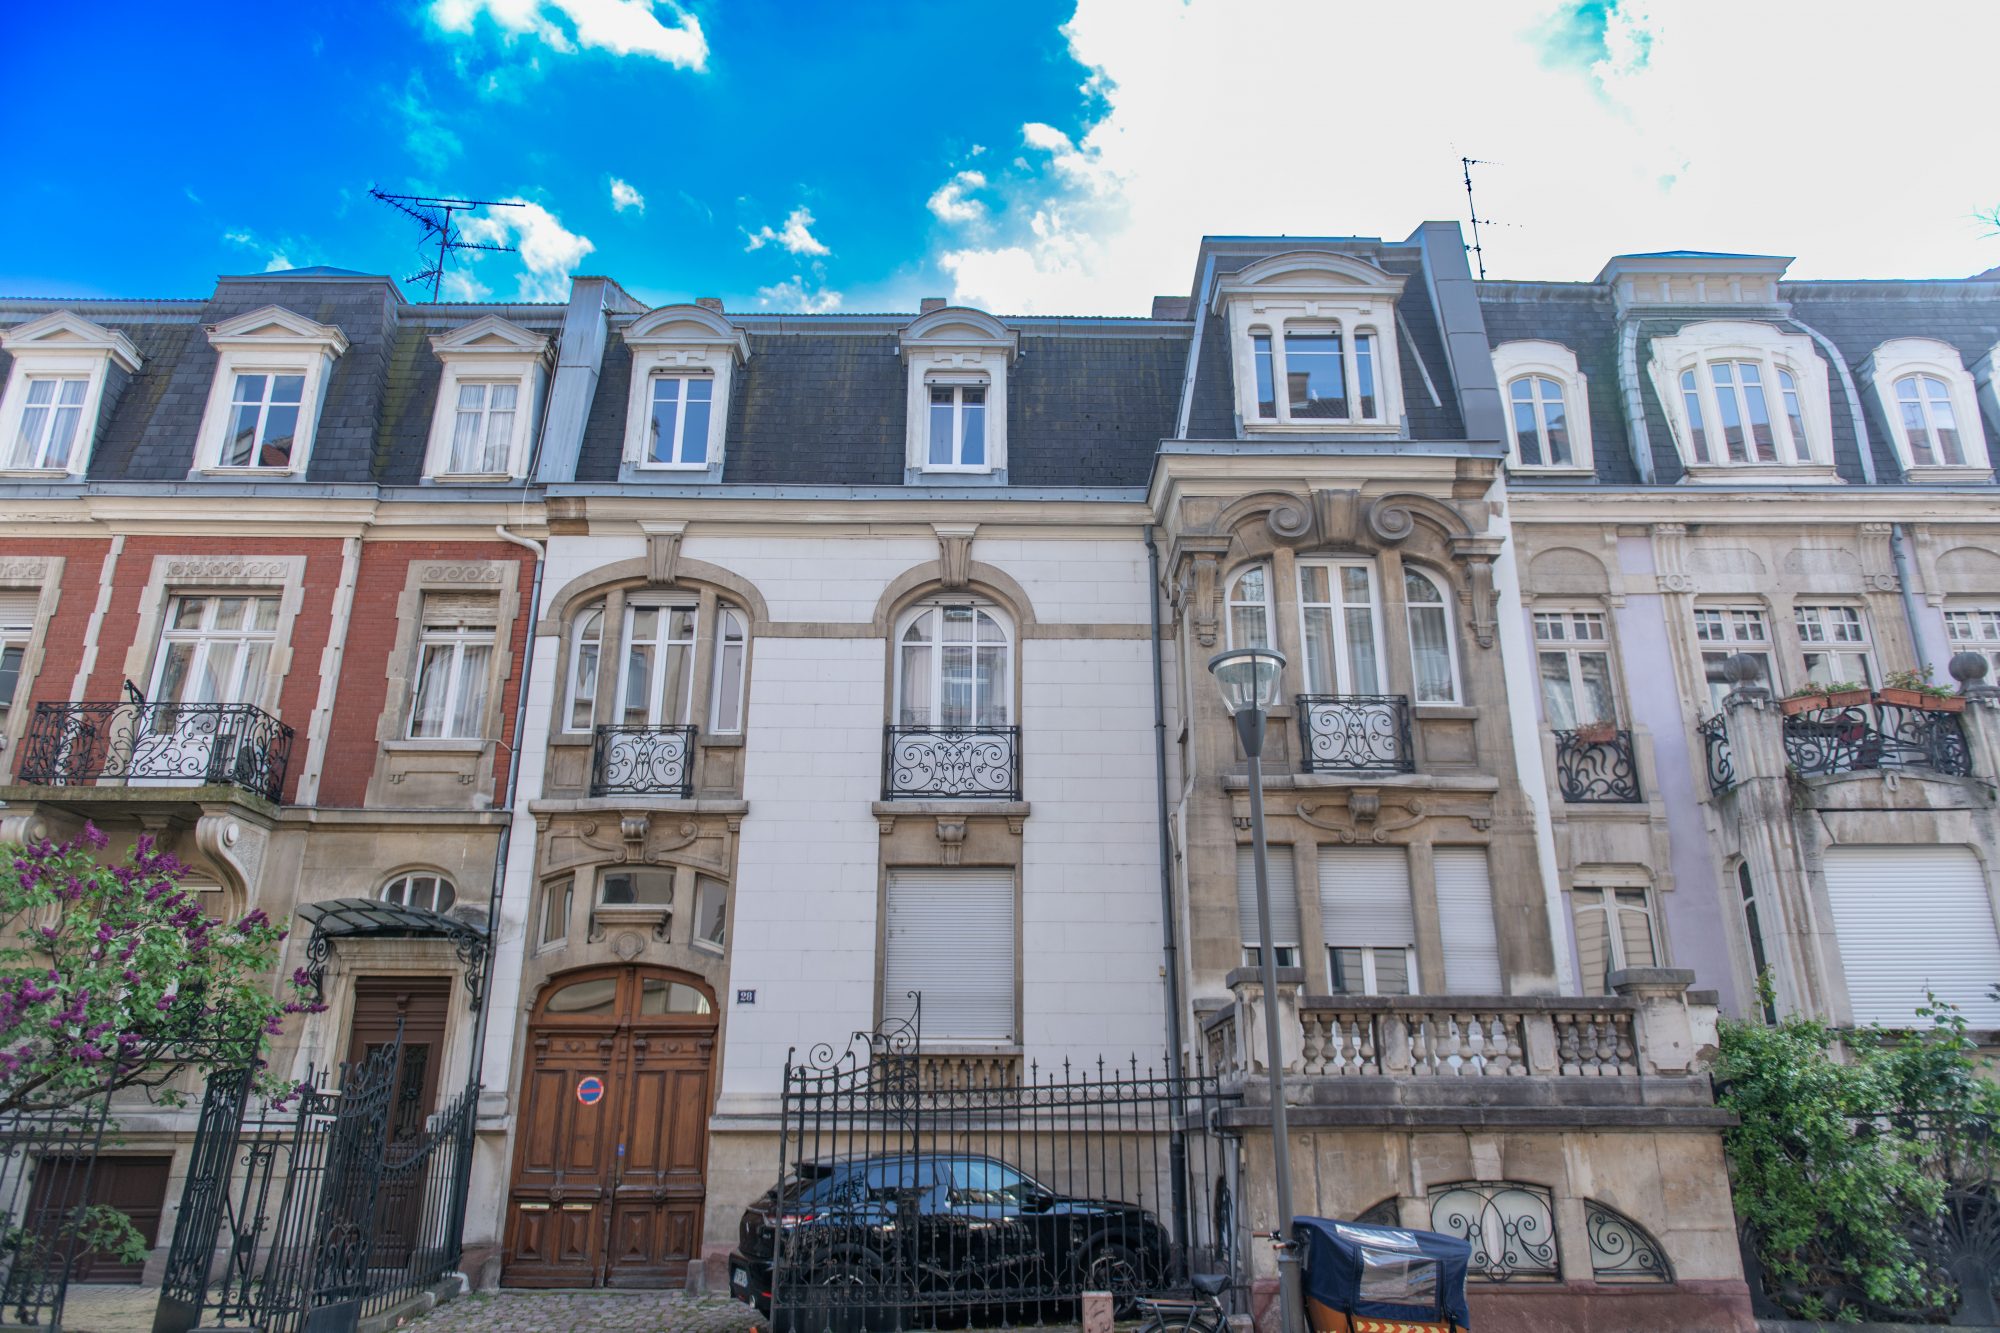 4 pièces avec terrasse - achat appartement Strasbourg - Bintz Immobilier - 15